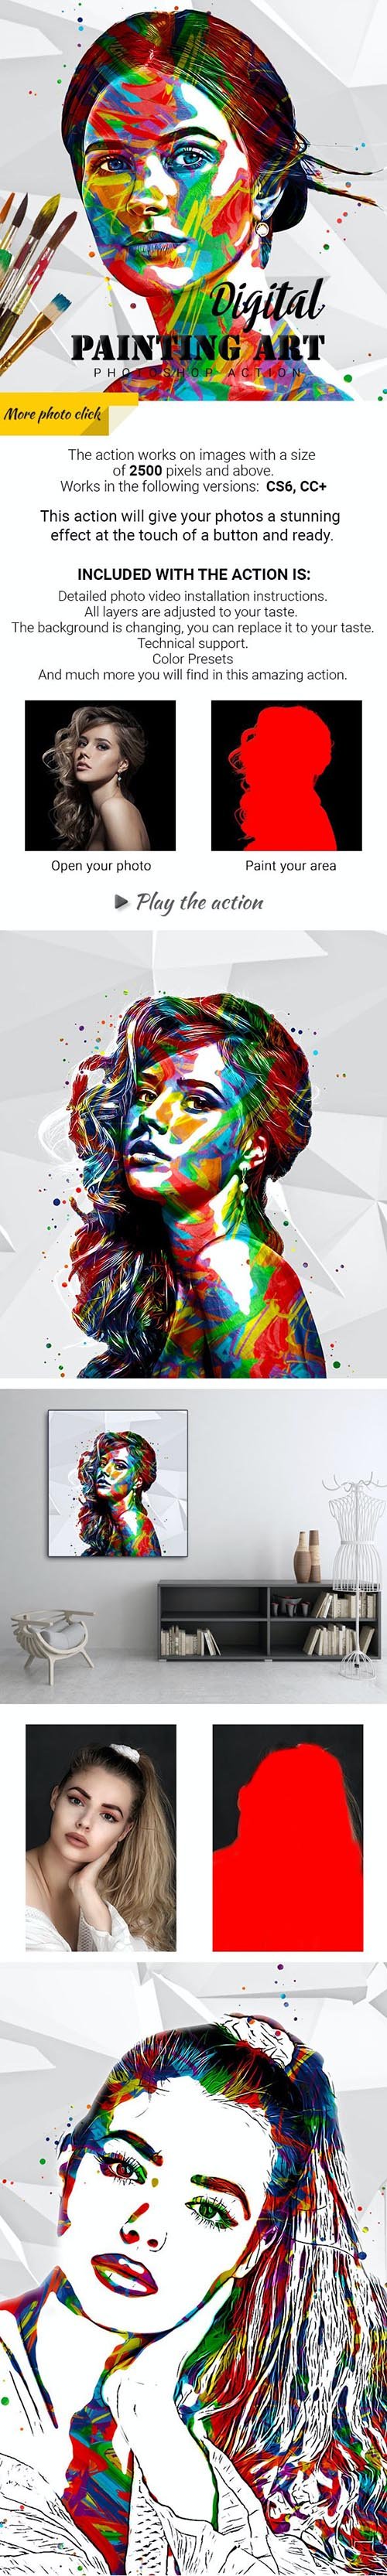 GraphicRiver - Digital Painting Art Photoshop Action - 29855516